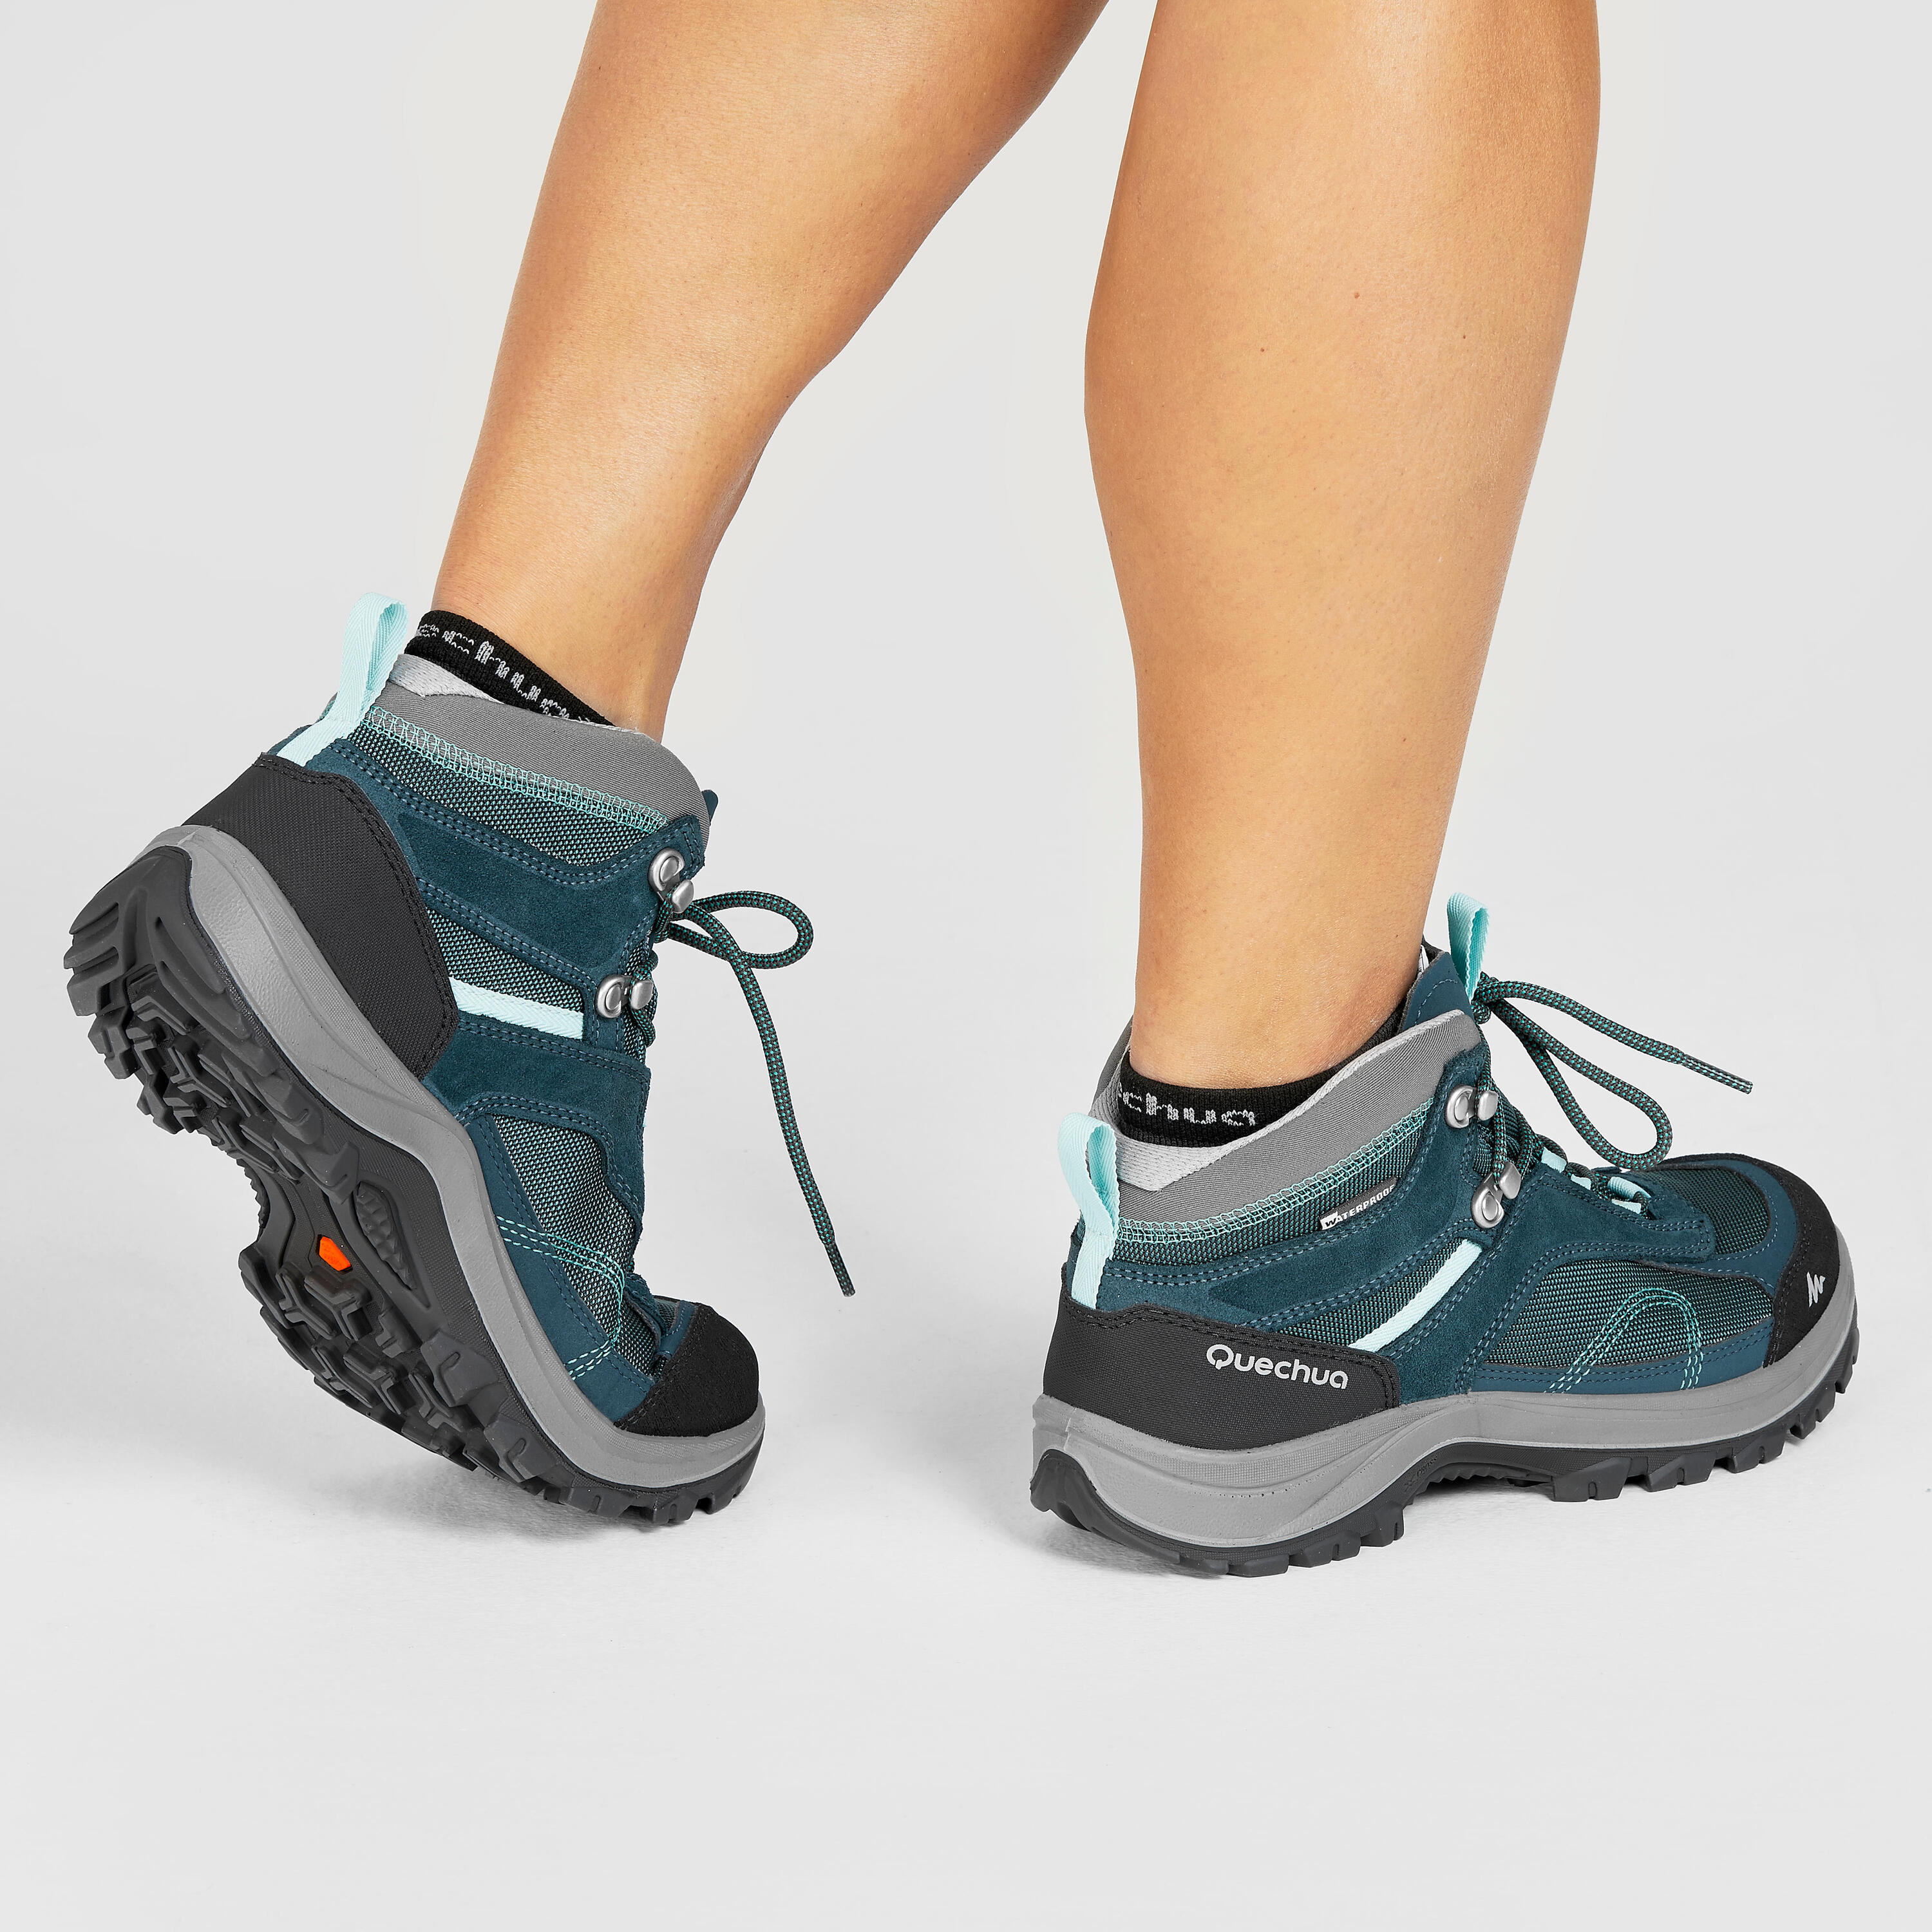 Women’s waterproof mountain walking boots - MH100 Mid - Turquoise 6/6